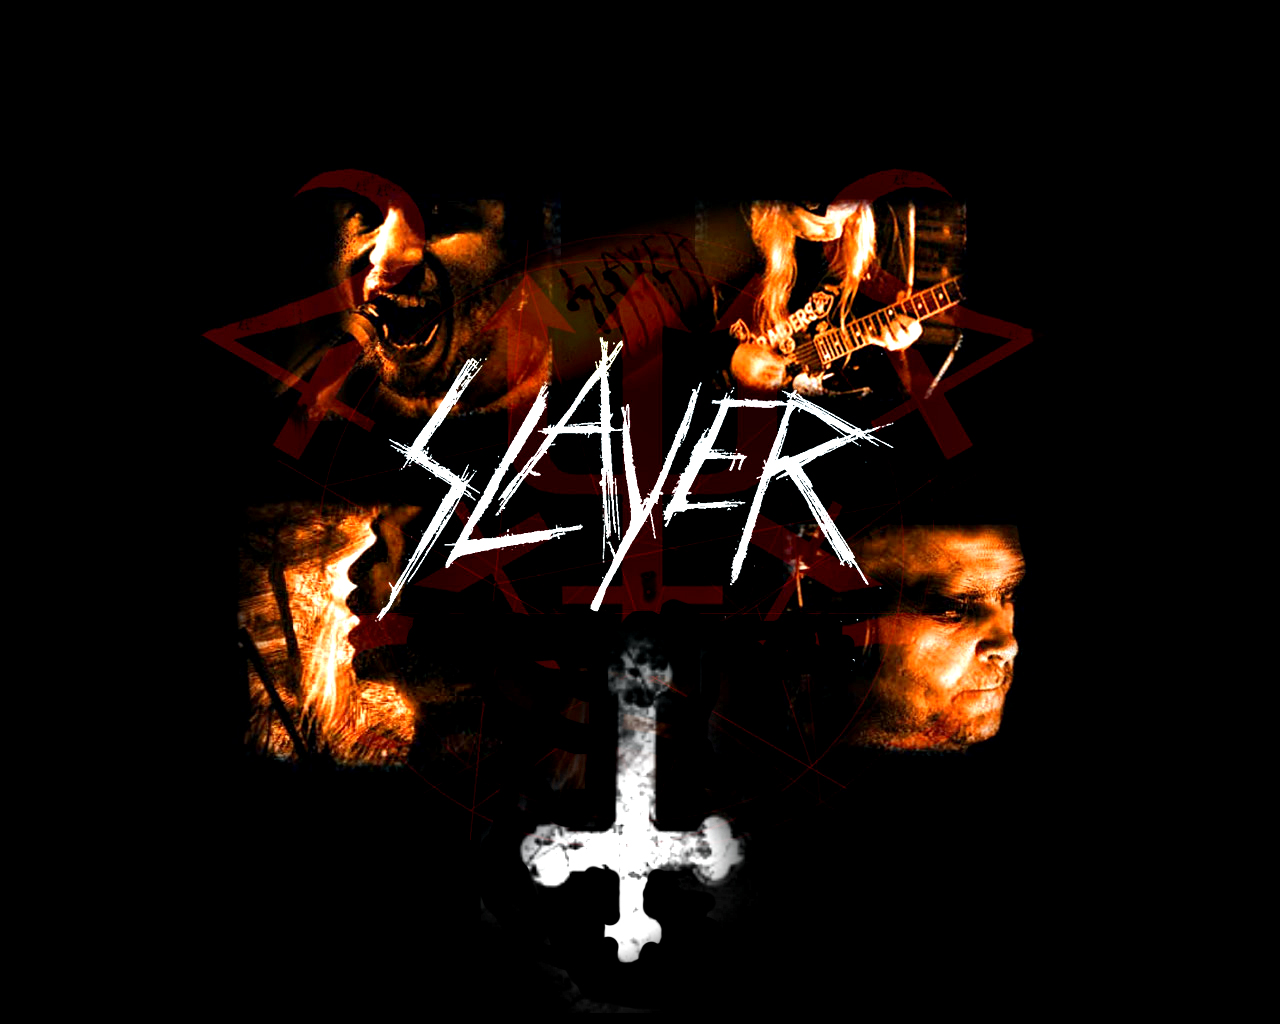 Slayer Computer Wallpapers Desktop Backgrounds 1280x1024 ID